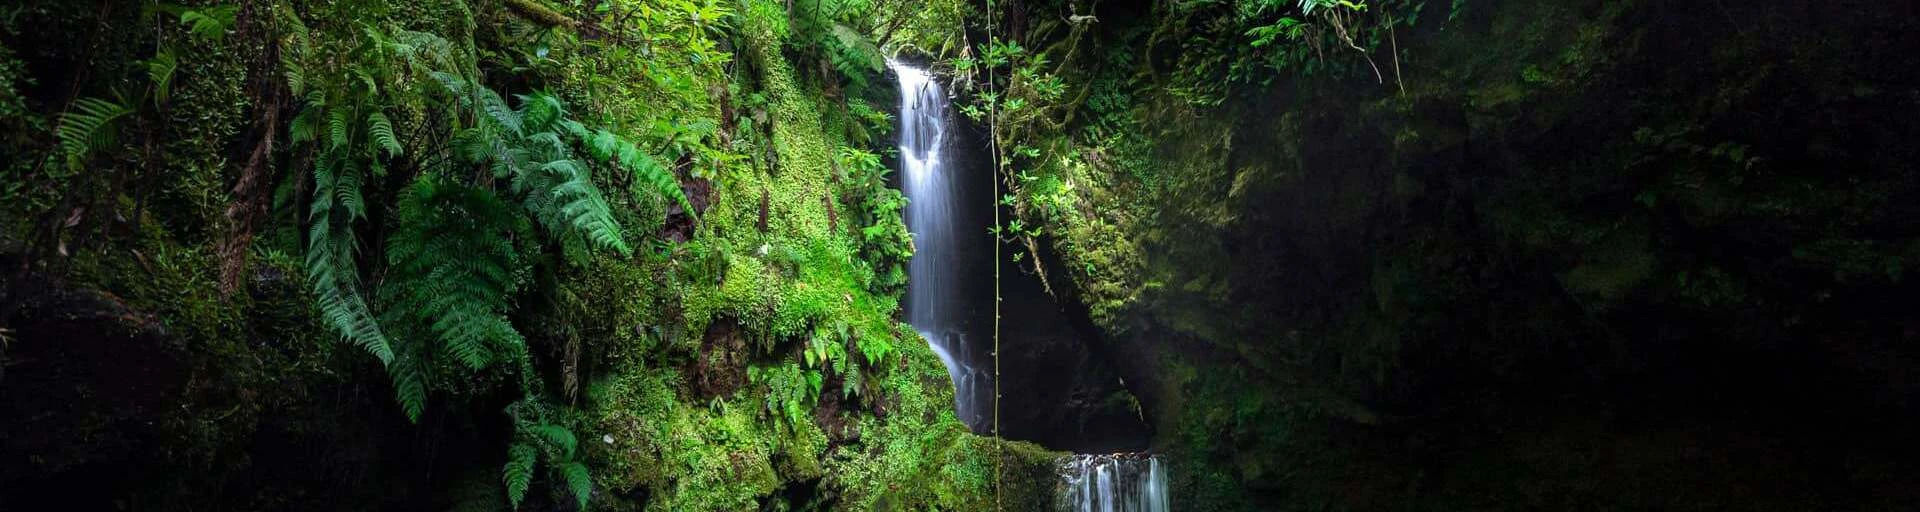 Pulga Waterfall Header